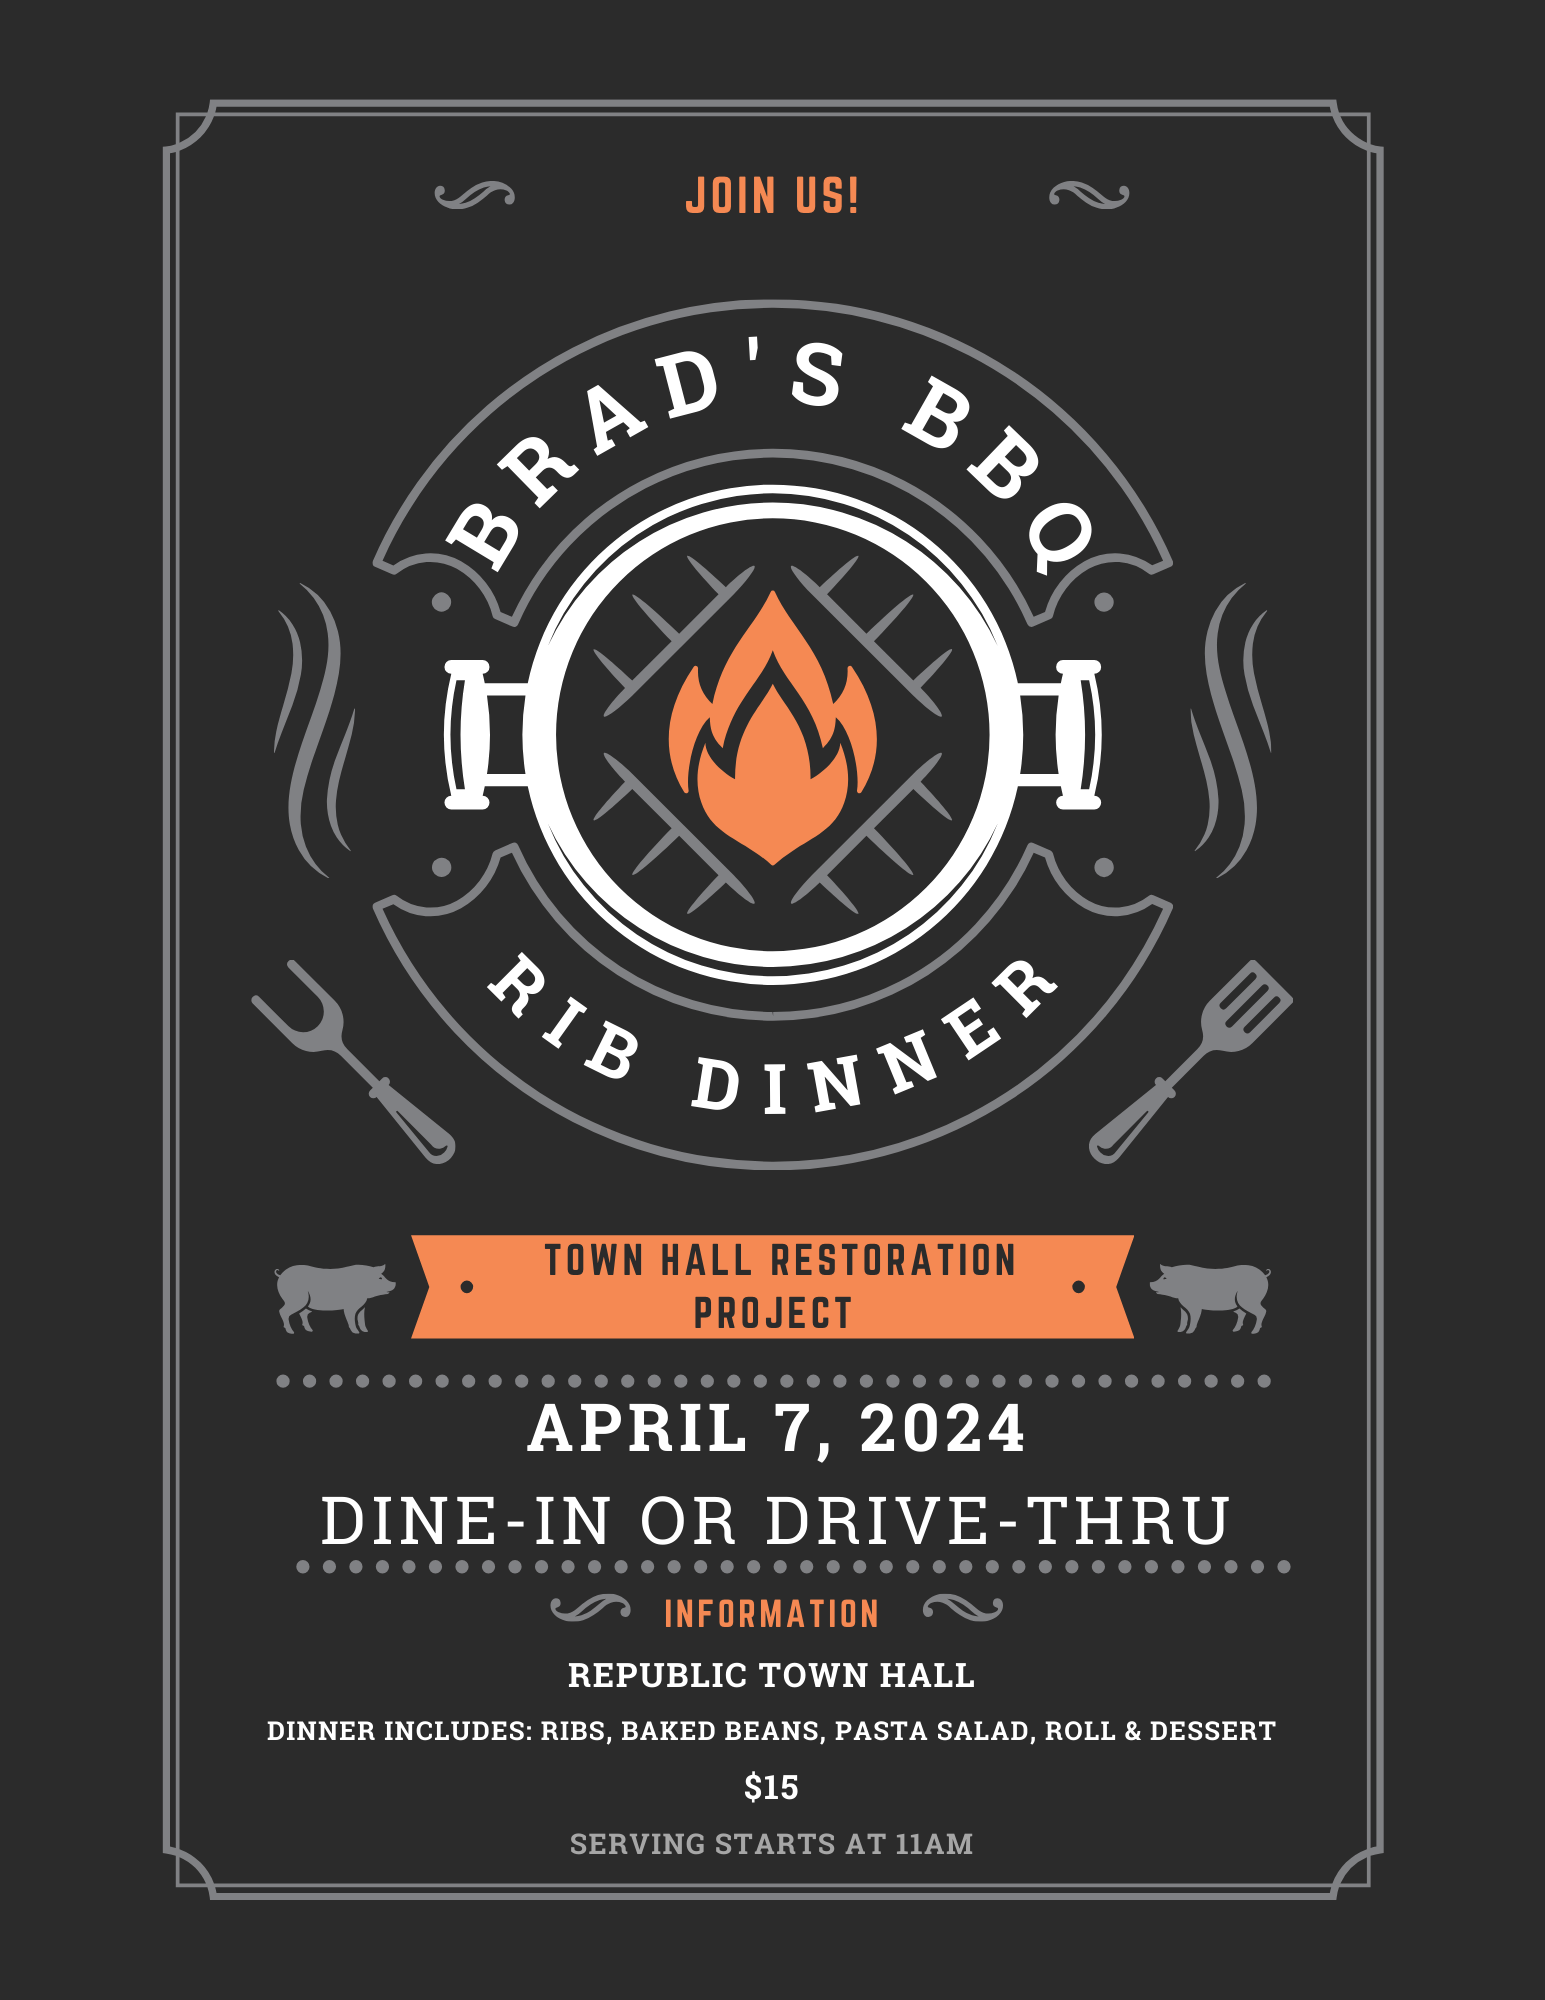 Brad's BBQ Rib Dinner